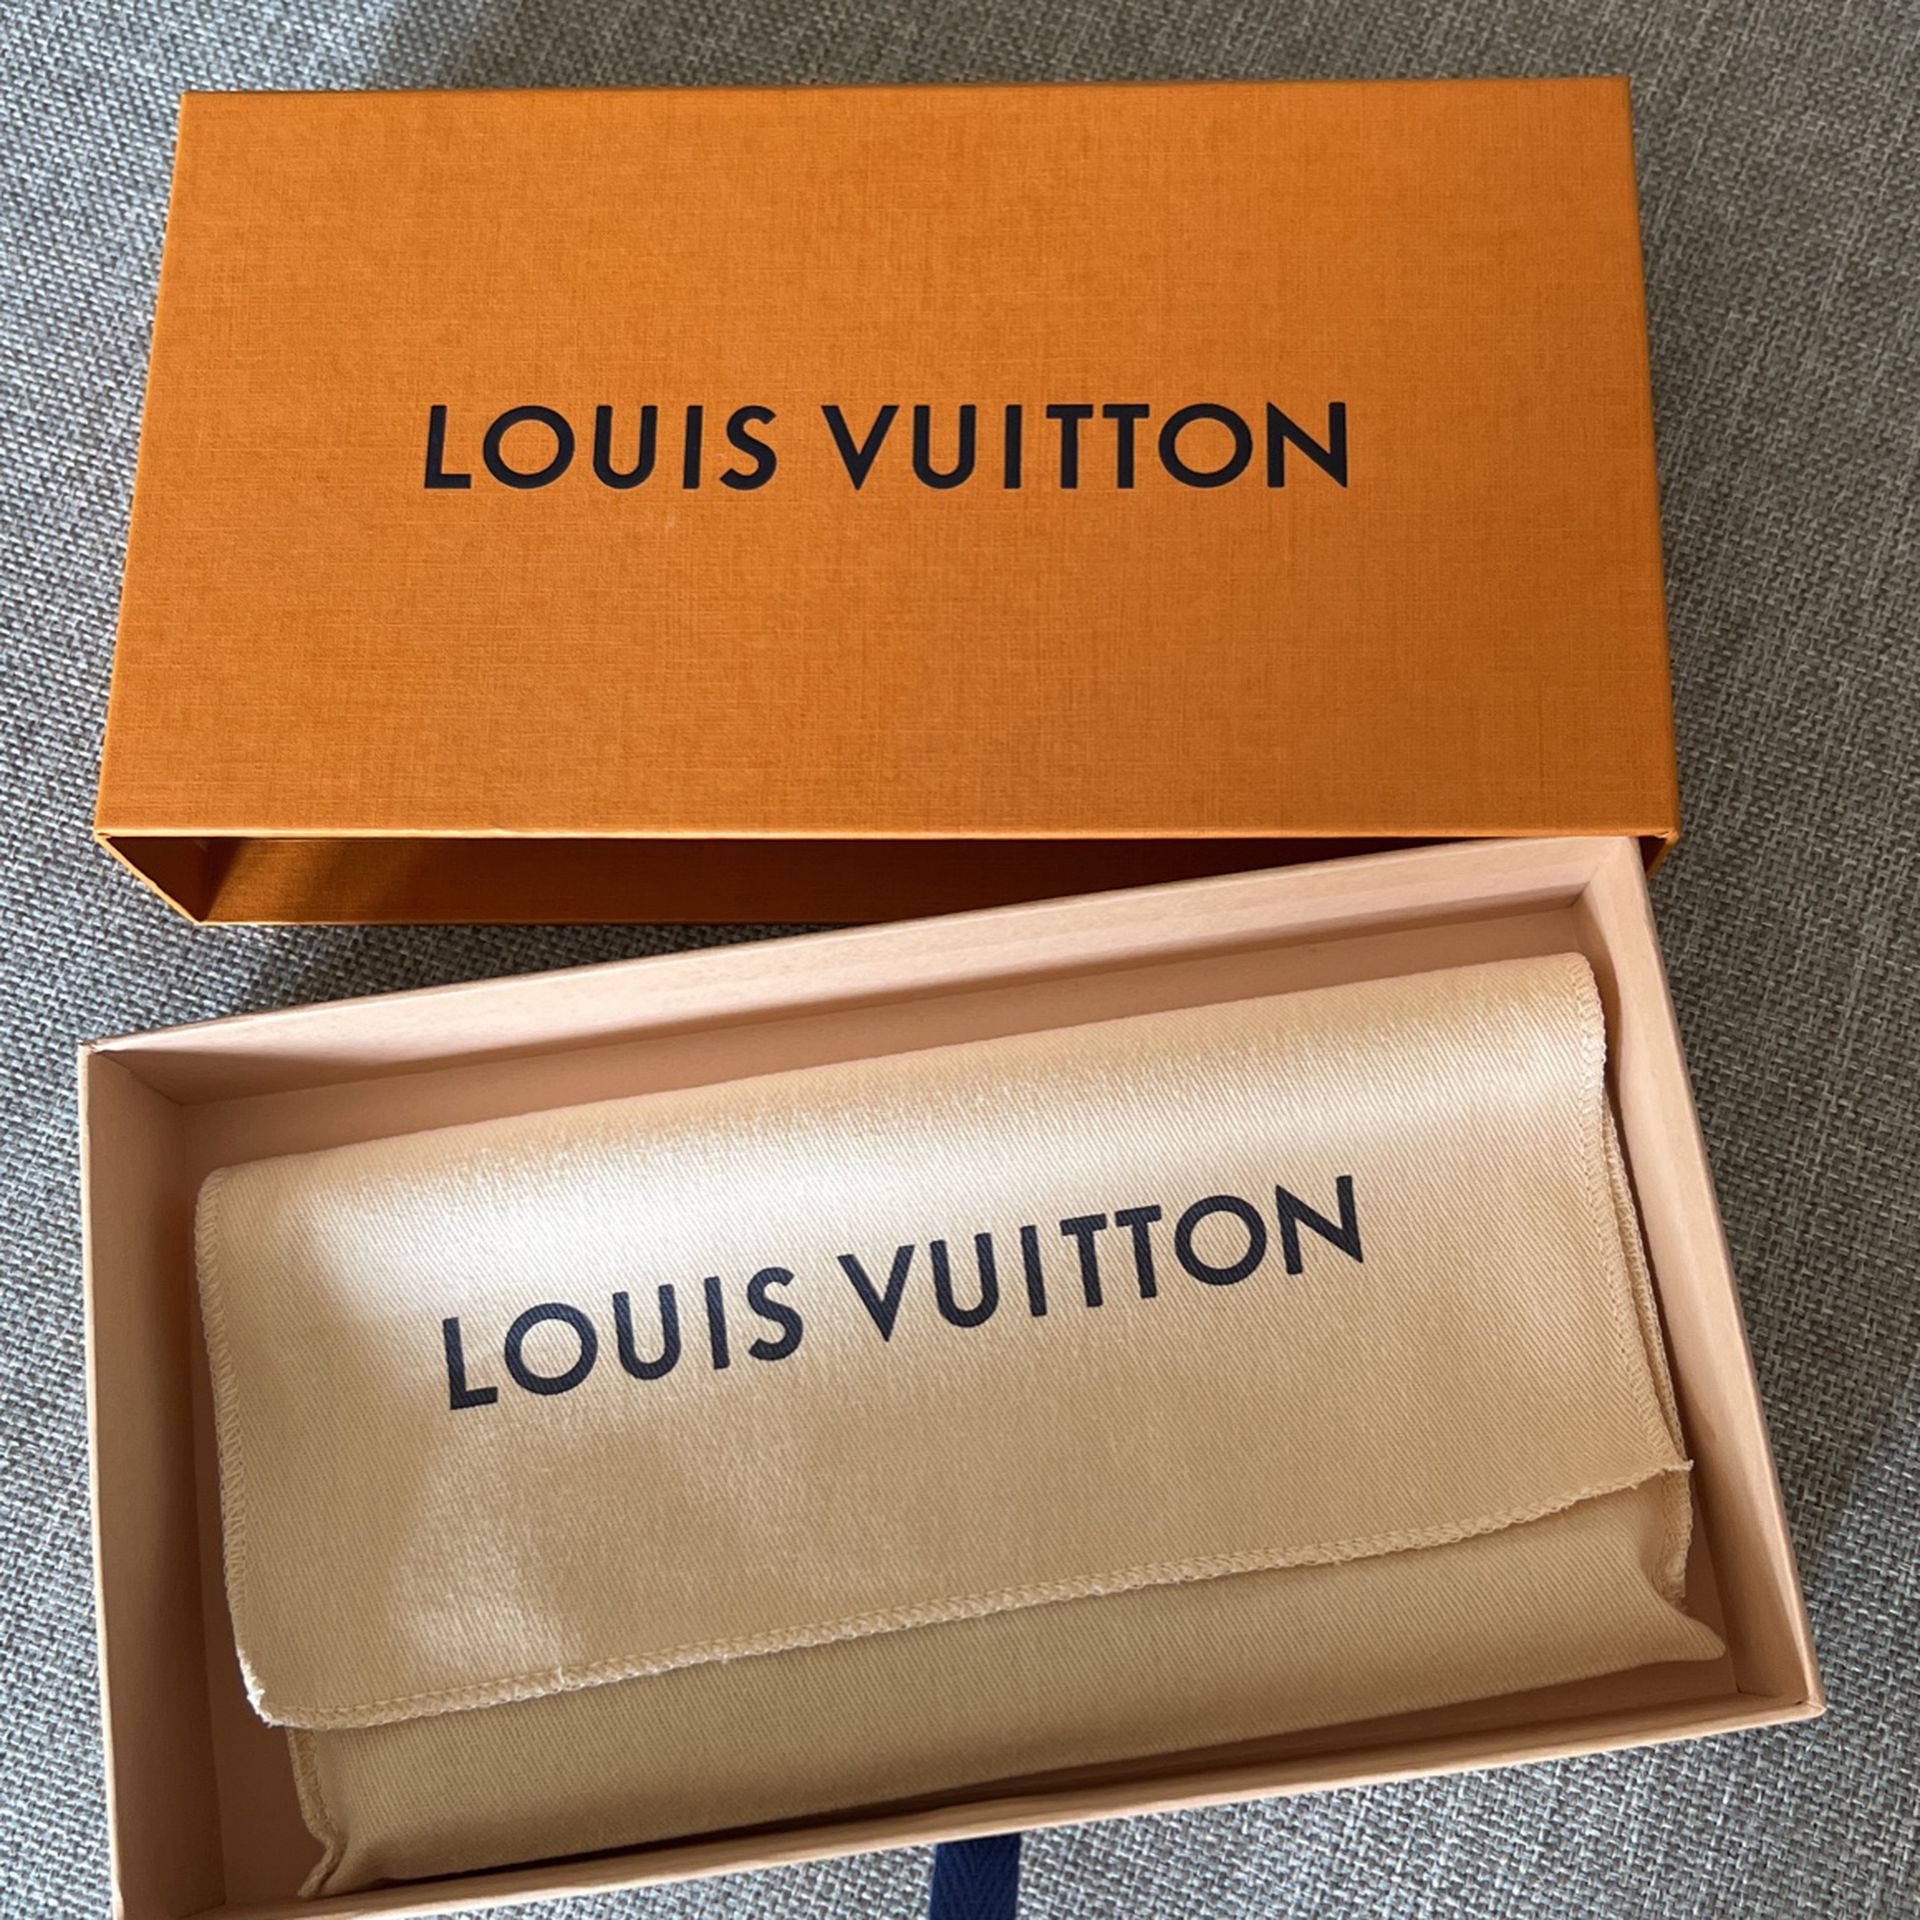 Authentic Louis Vuitton Box for Sale in Glendale, AZ - OfferUp